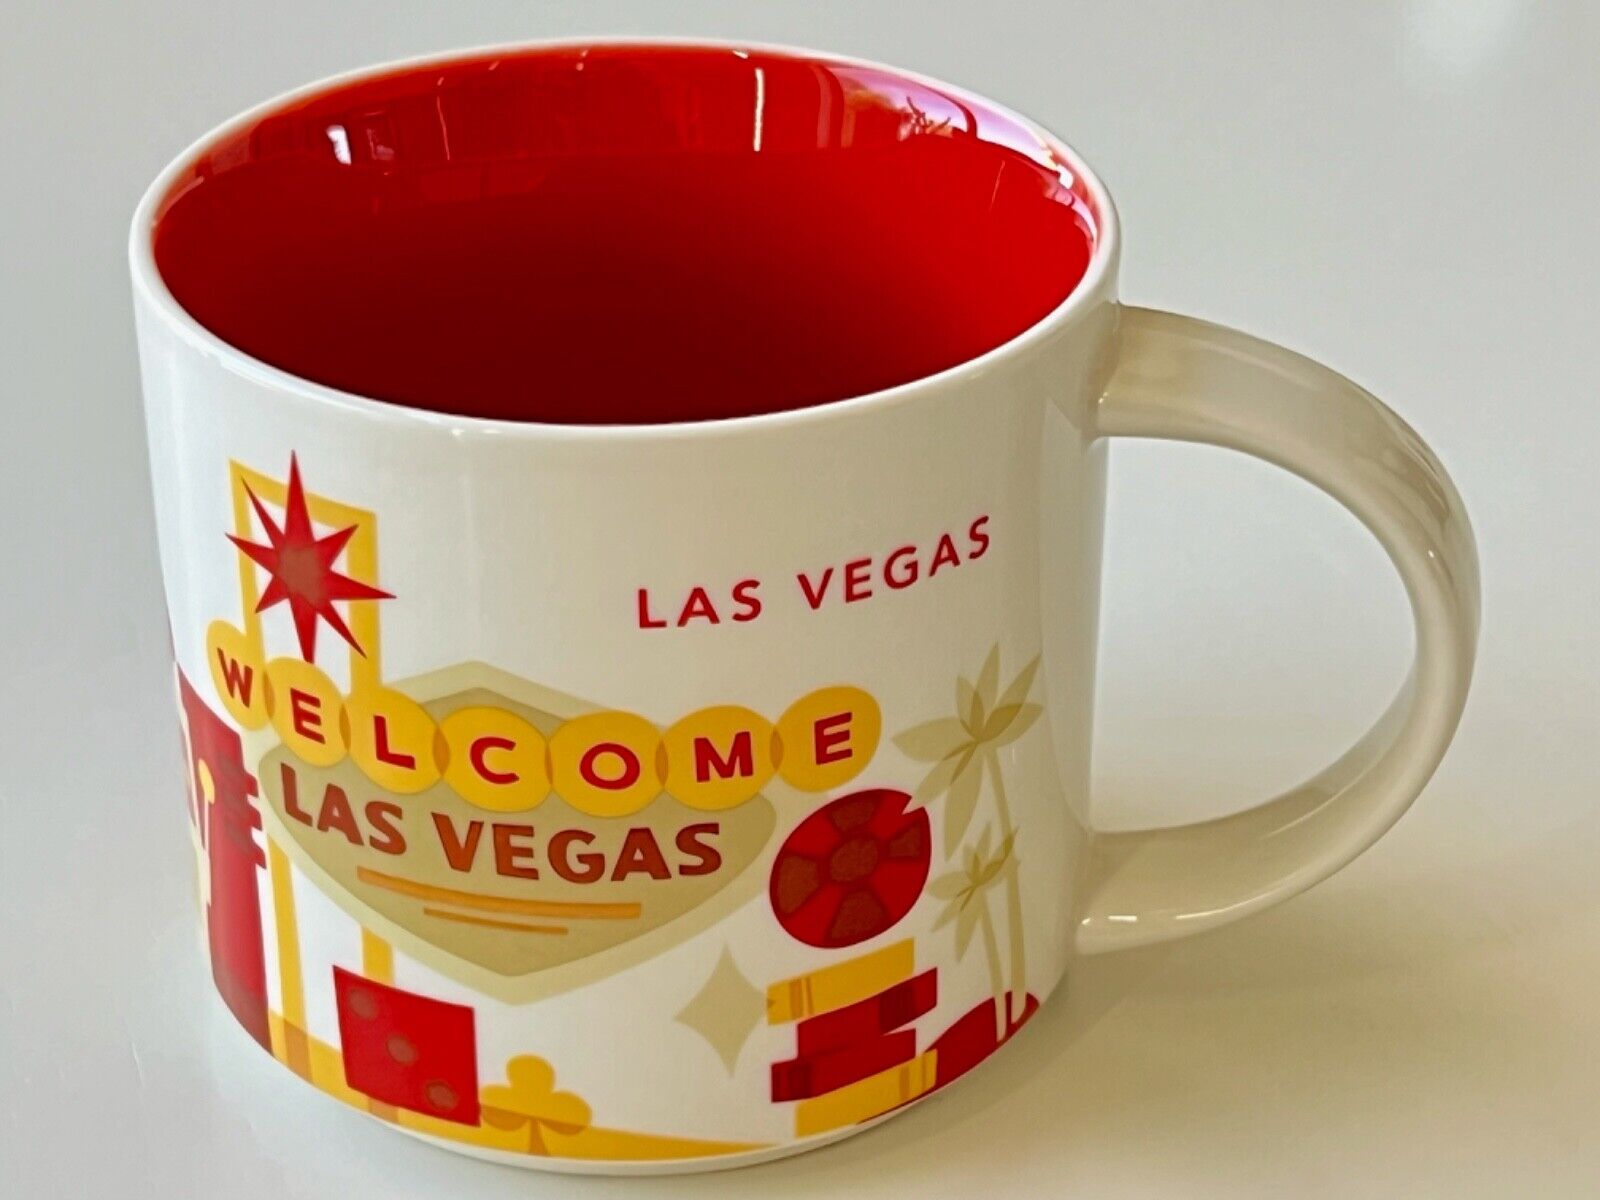 Starbucks Las Vegas mug